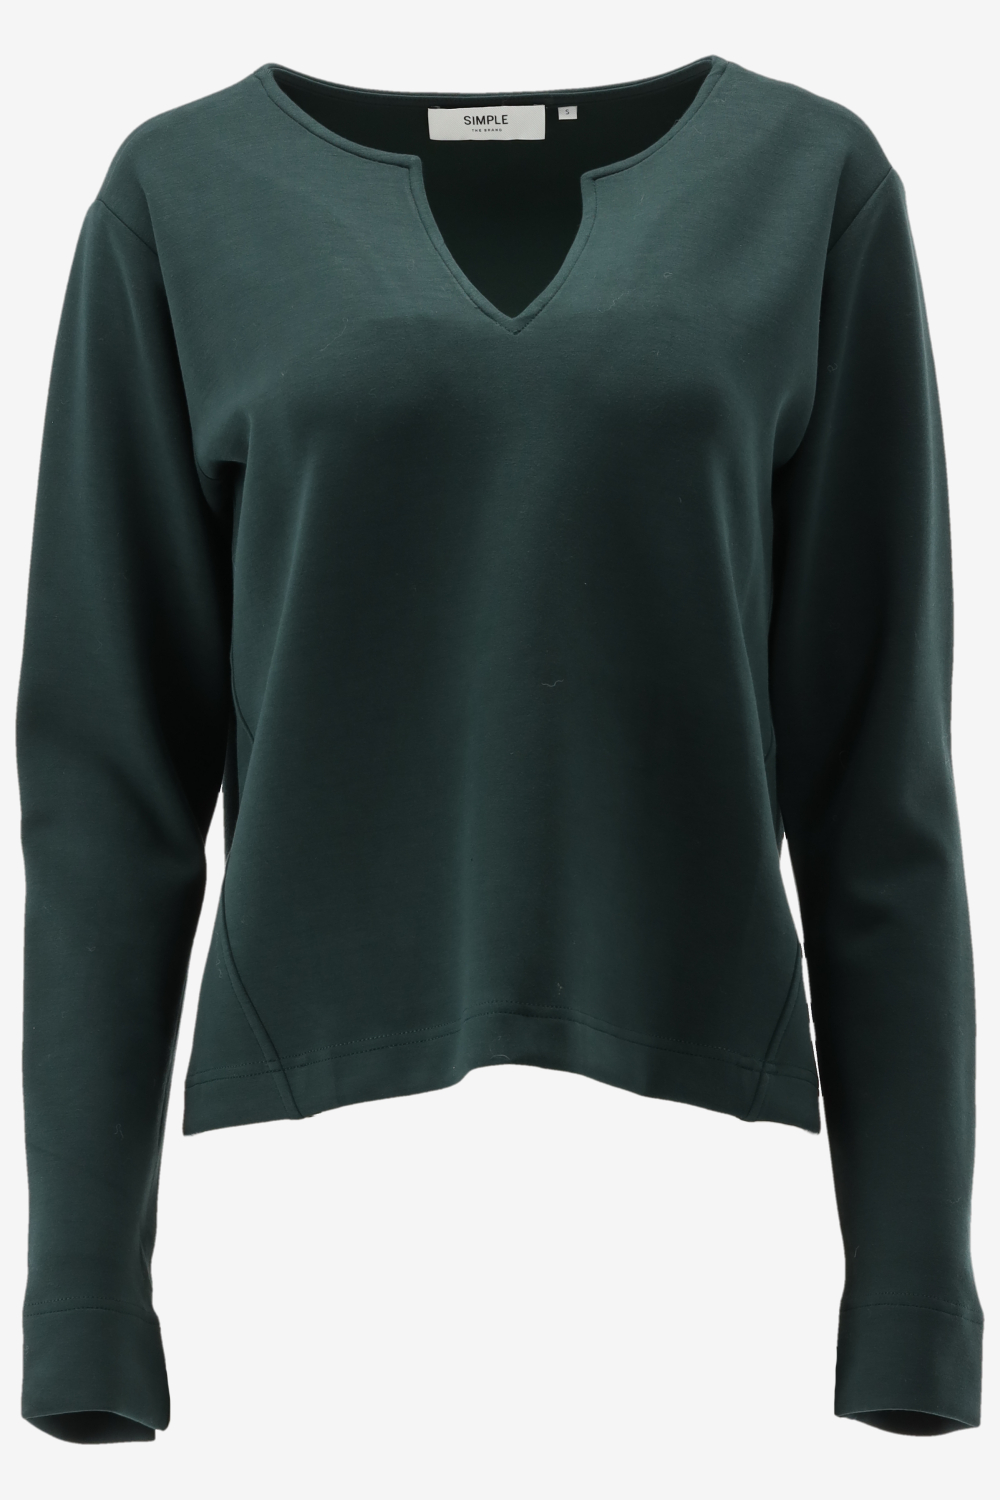 Simple Maddy Jer-modal-22-3 Tops & T-shirts Dames - Shirt - Groen - Maat XS